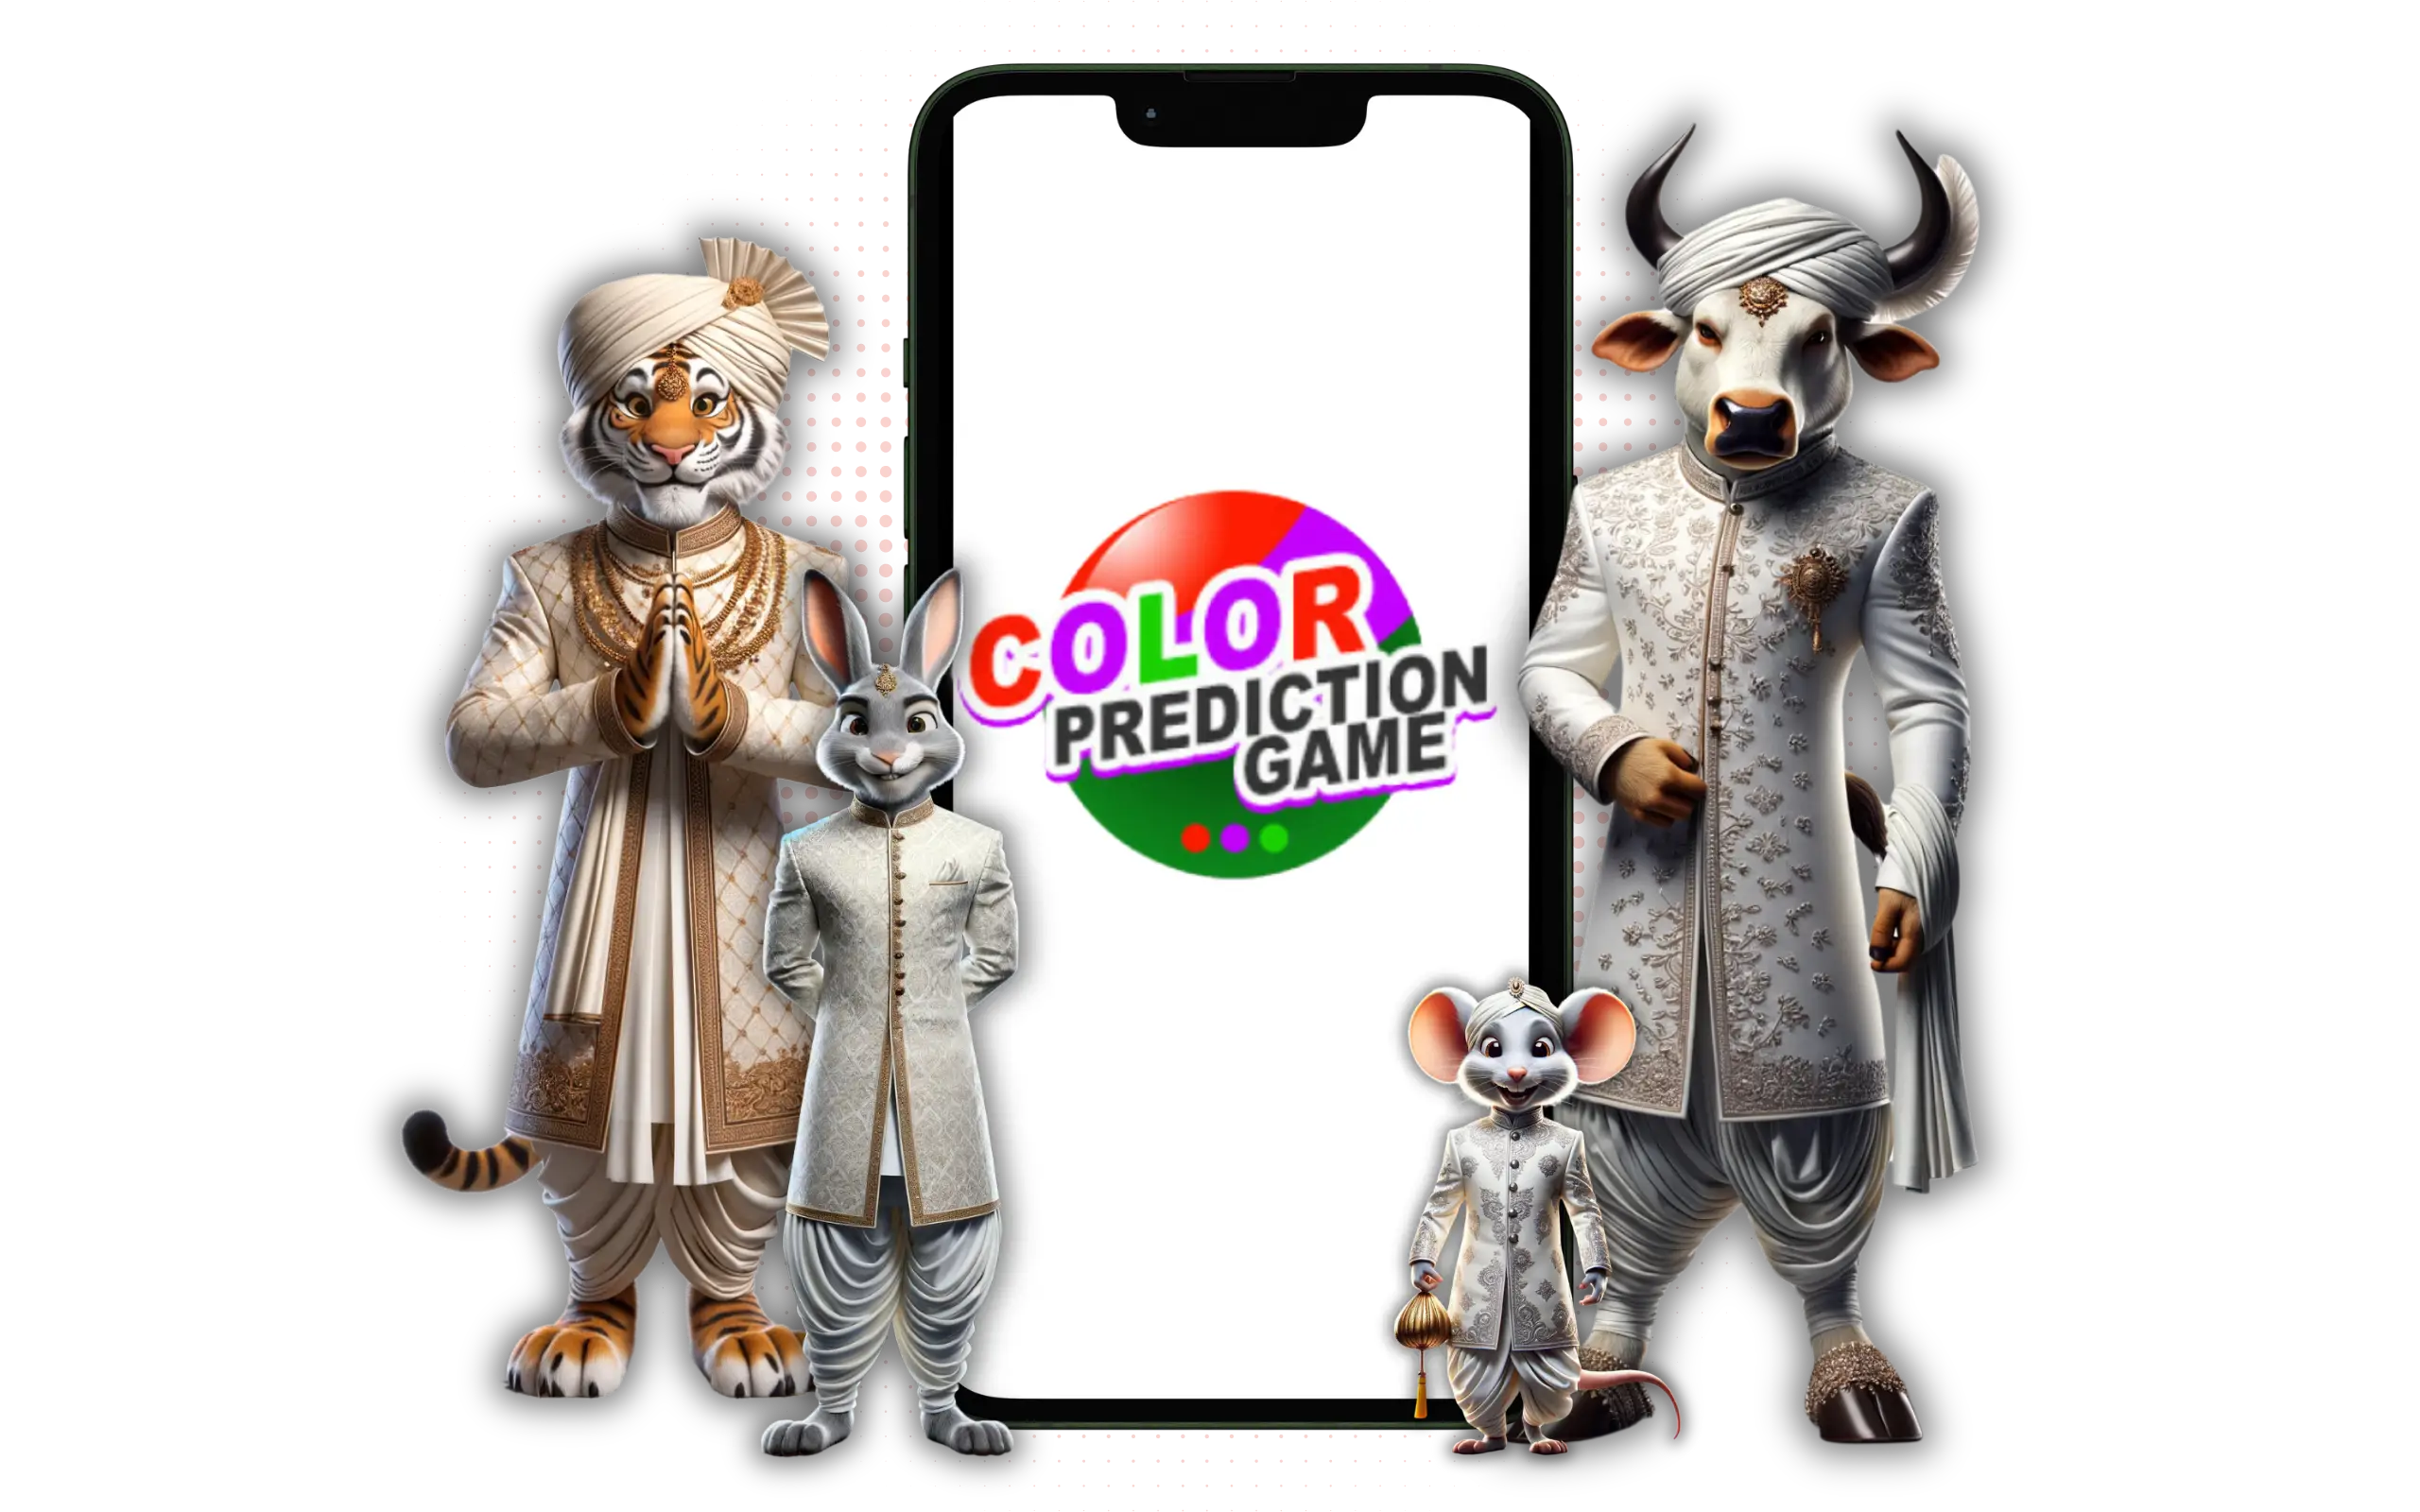 lucknow games color prediction game icon